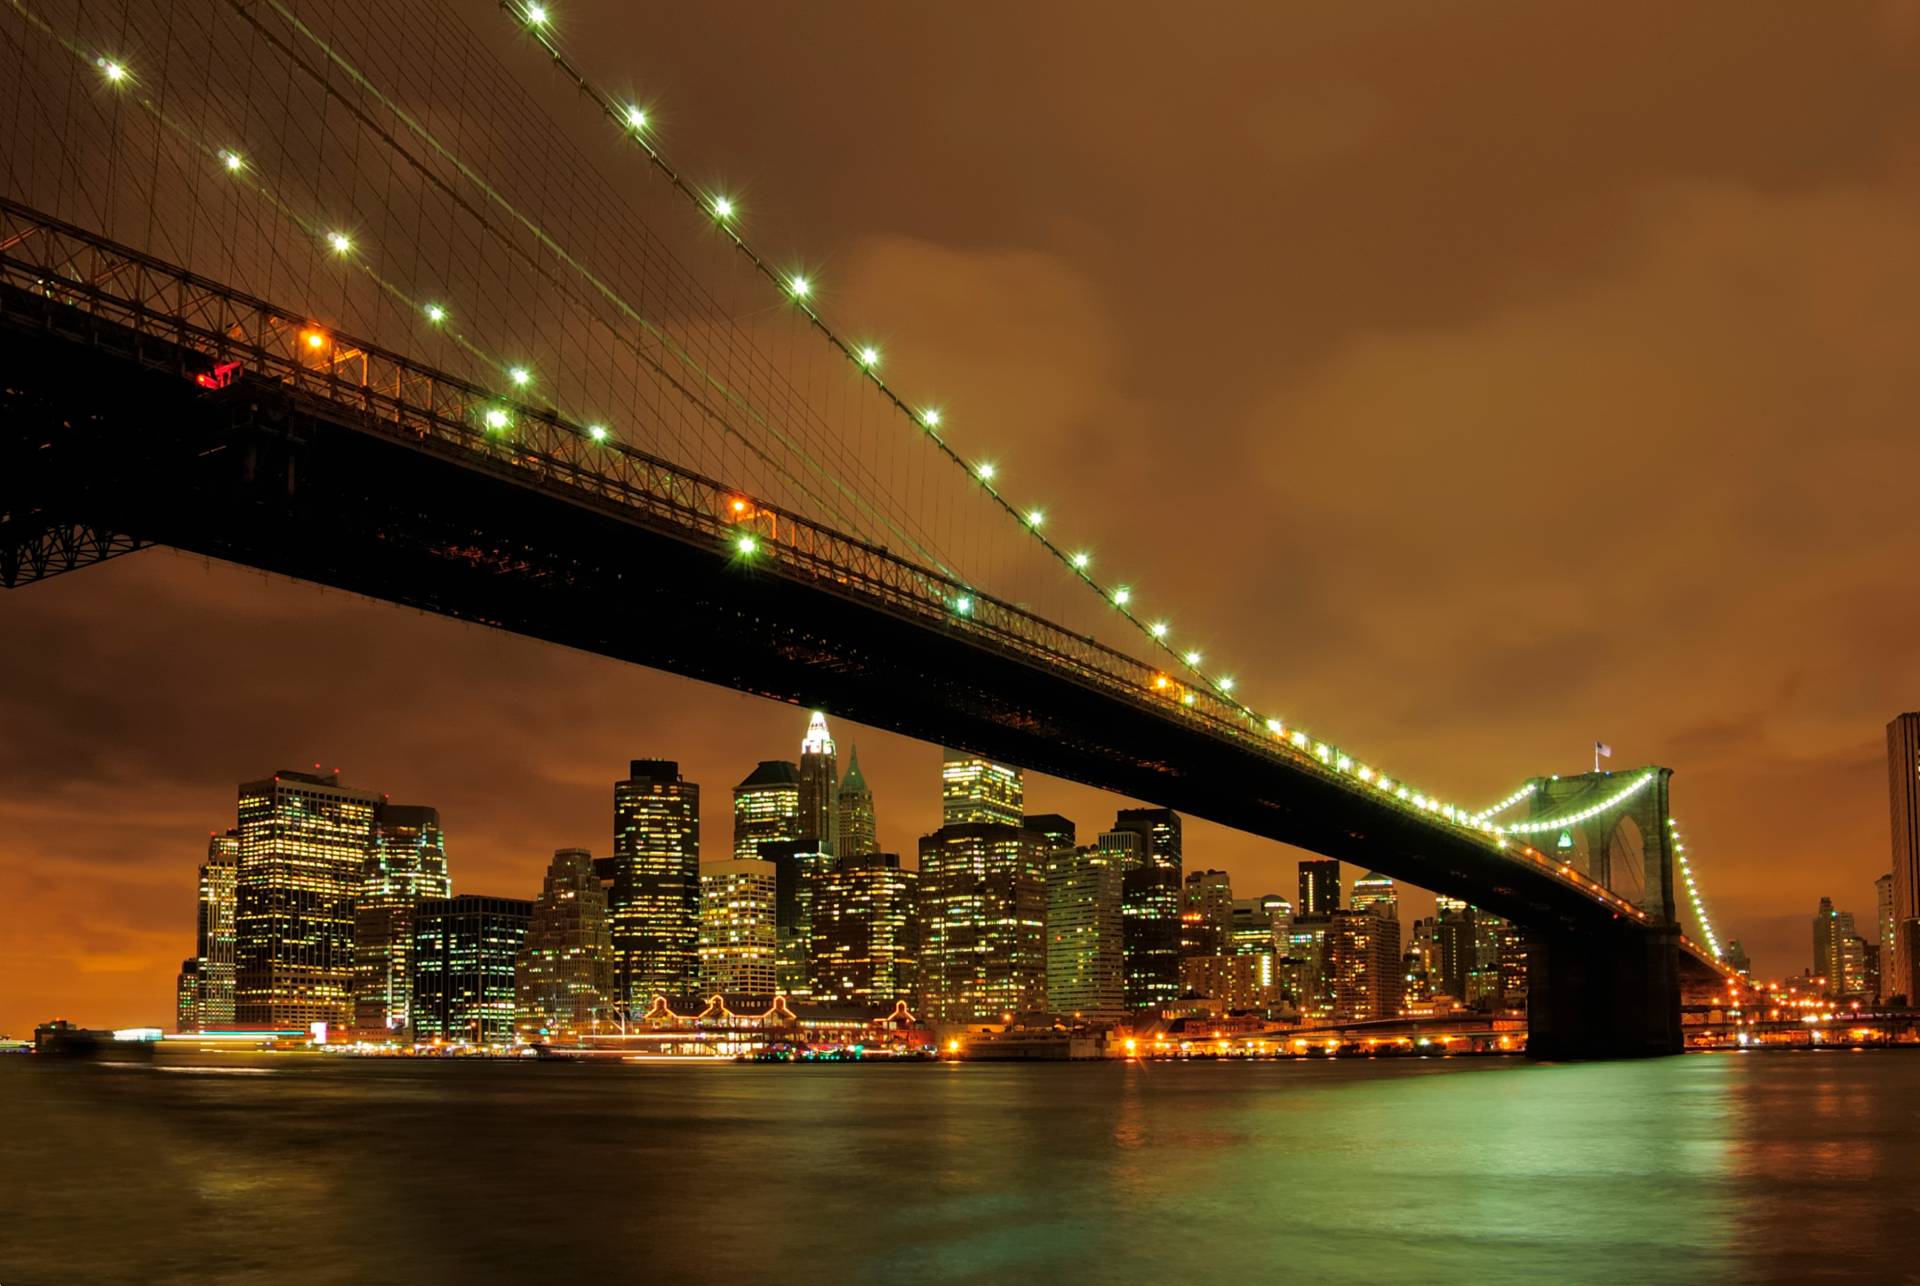 Papermoon Fototapete "Brooklyn Bridge by Night" von Papermoon